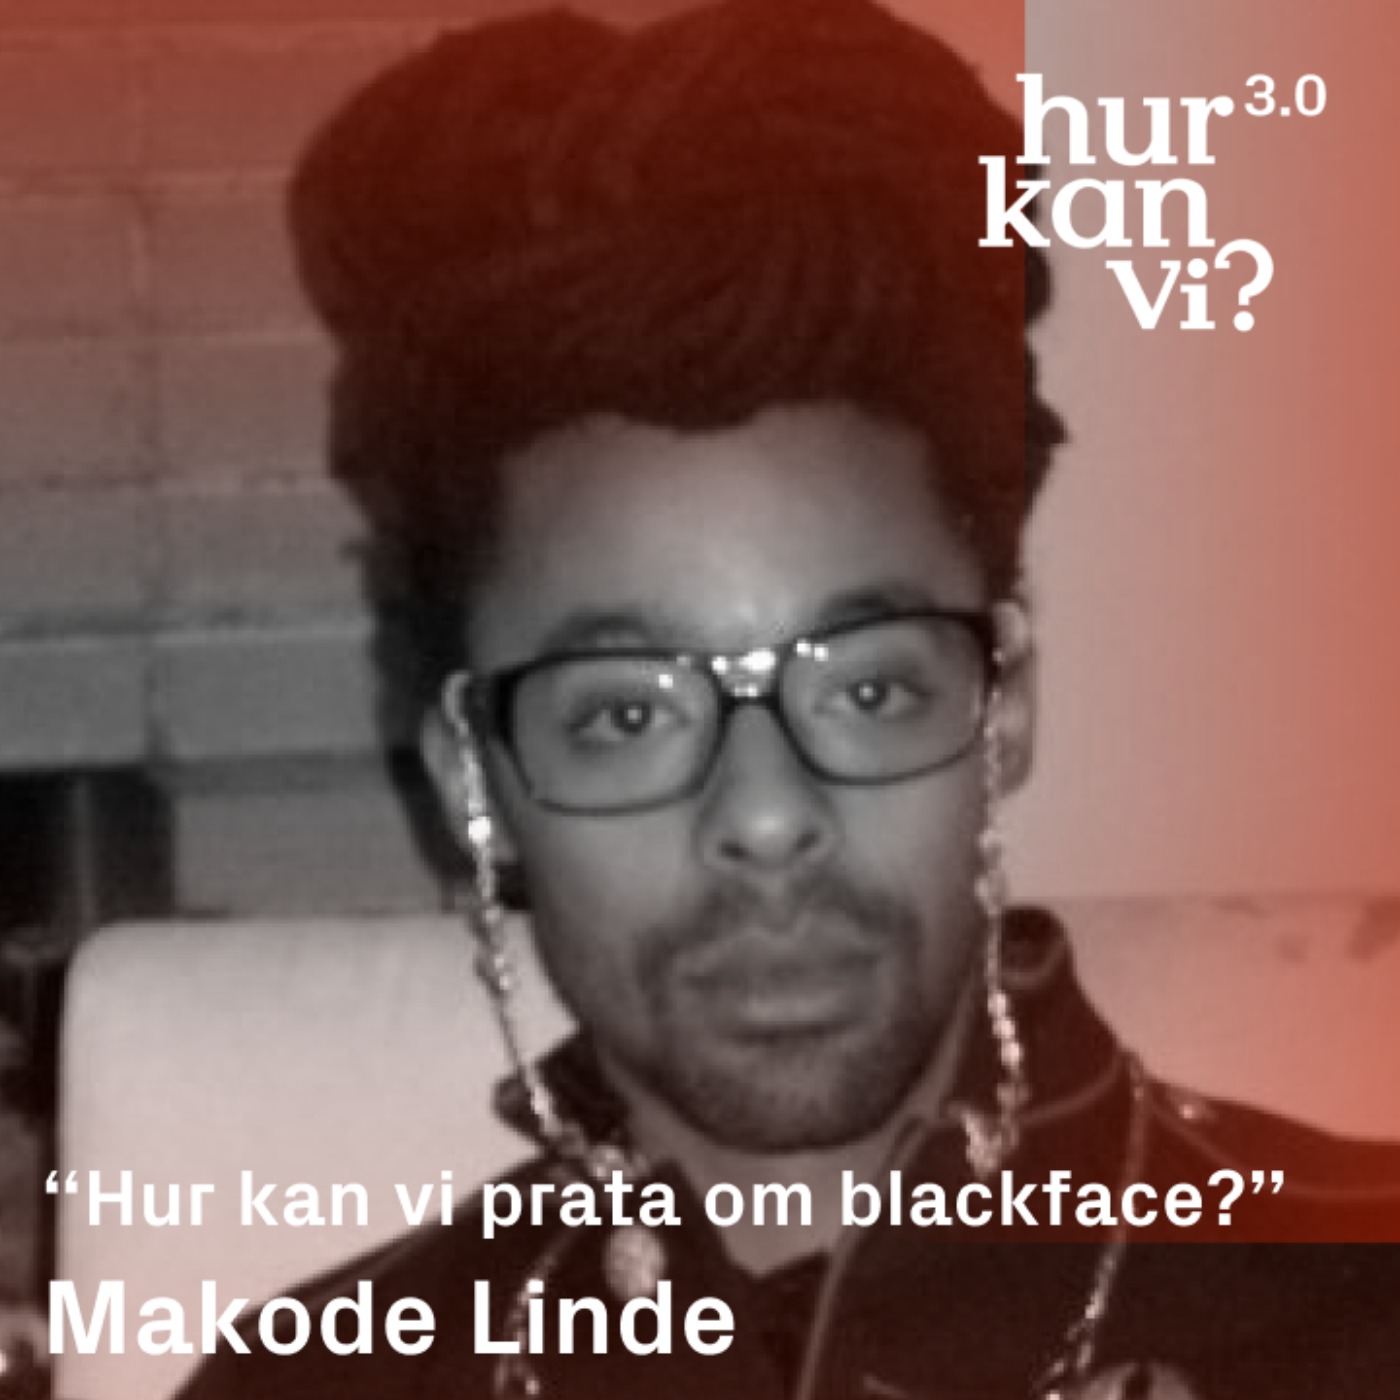 Makode Linde - “Hur kan vi prata om blackface?”